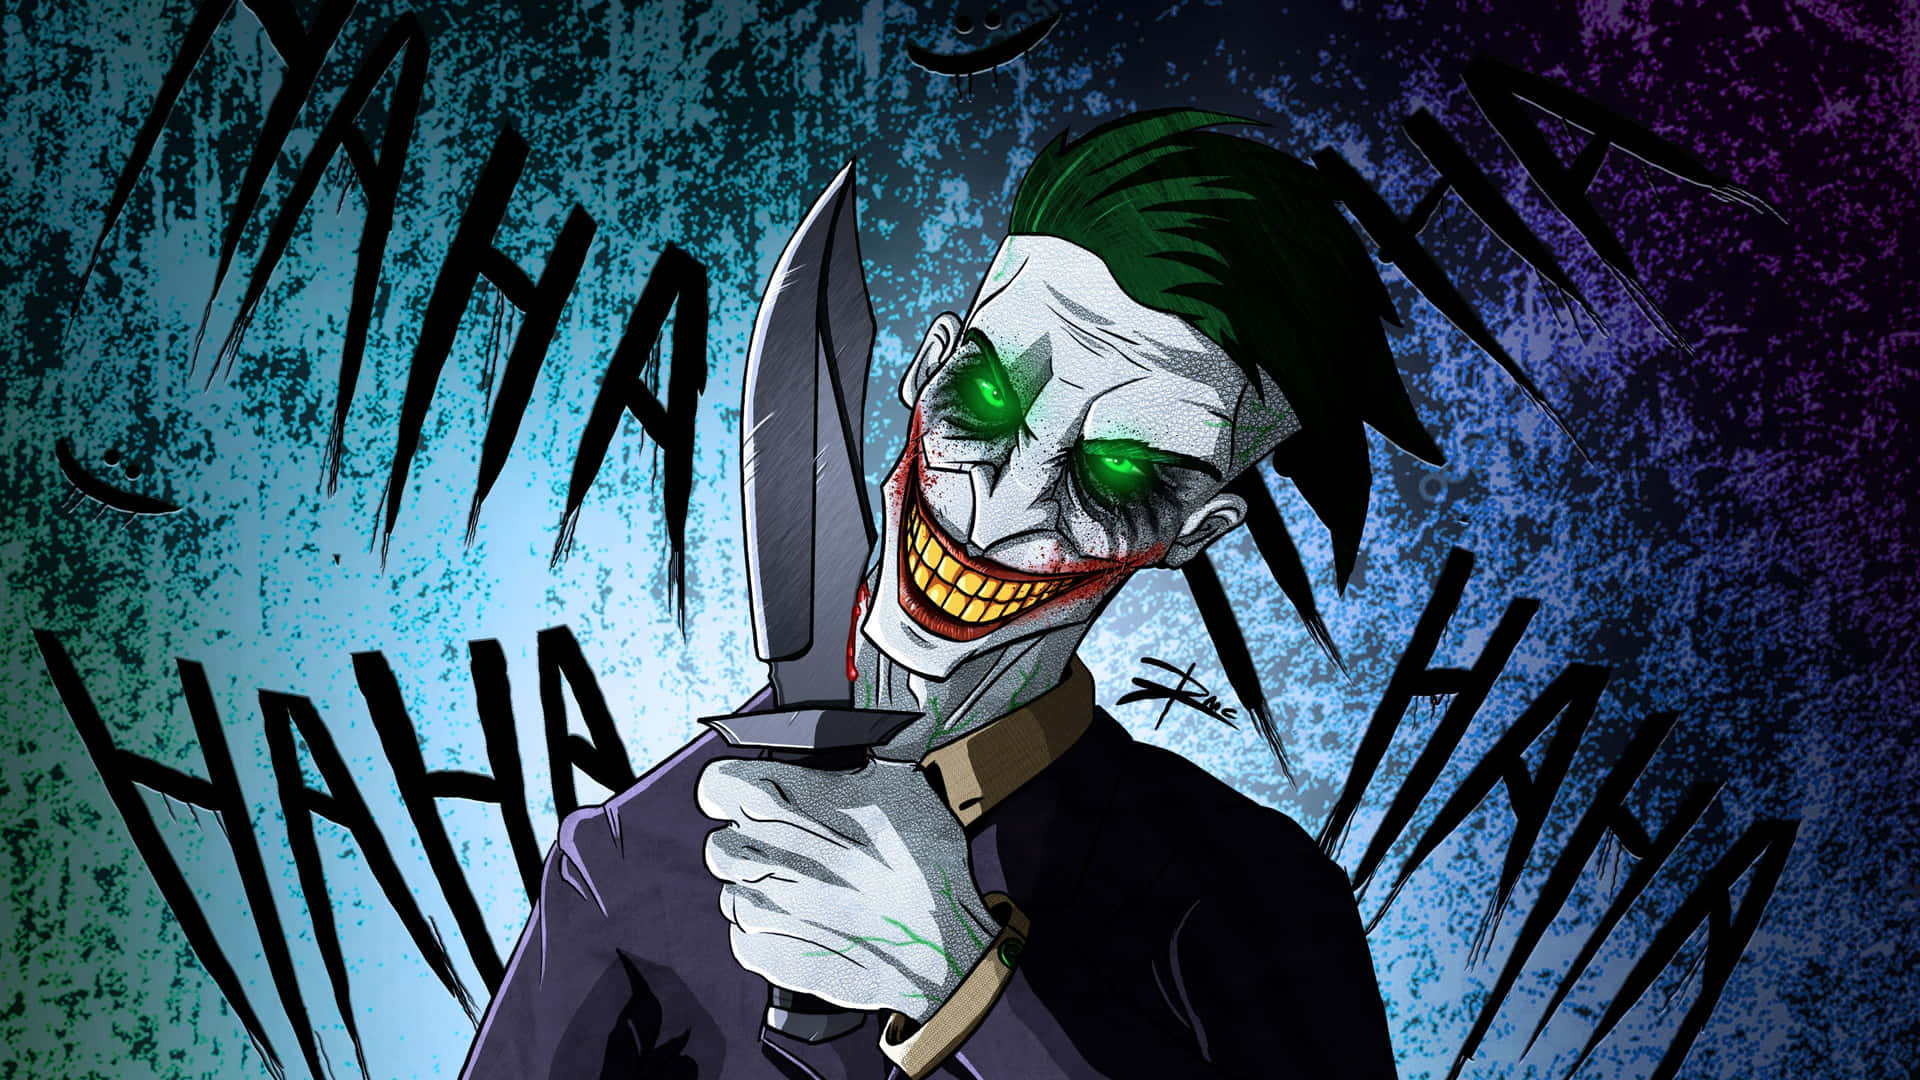 Cool Joker Holding Knife Haha Background